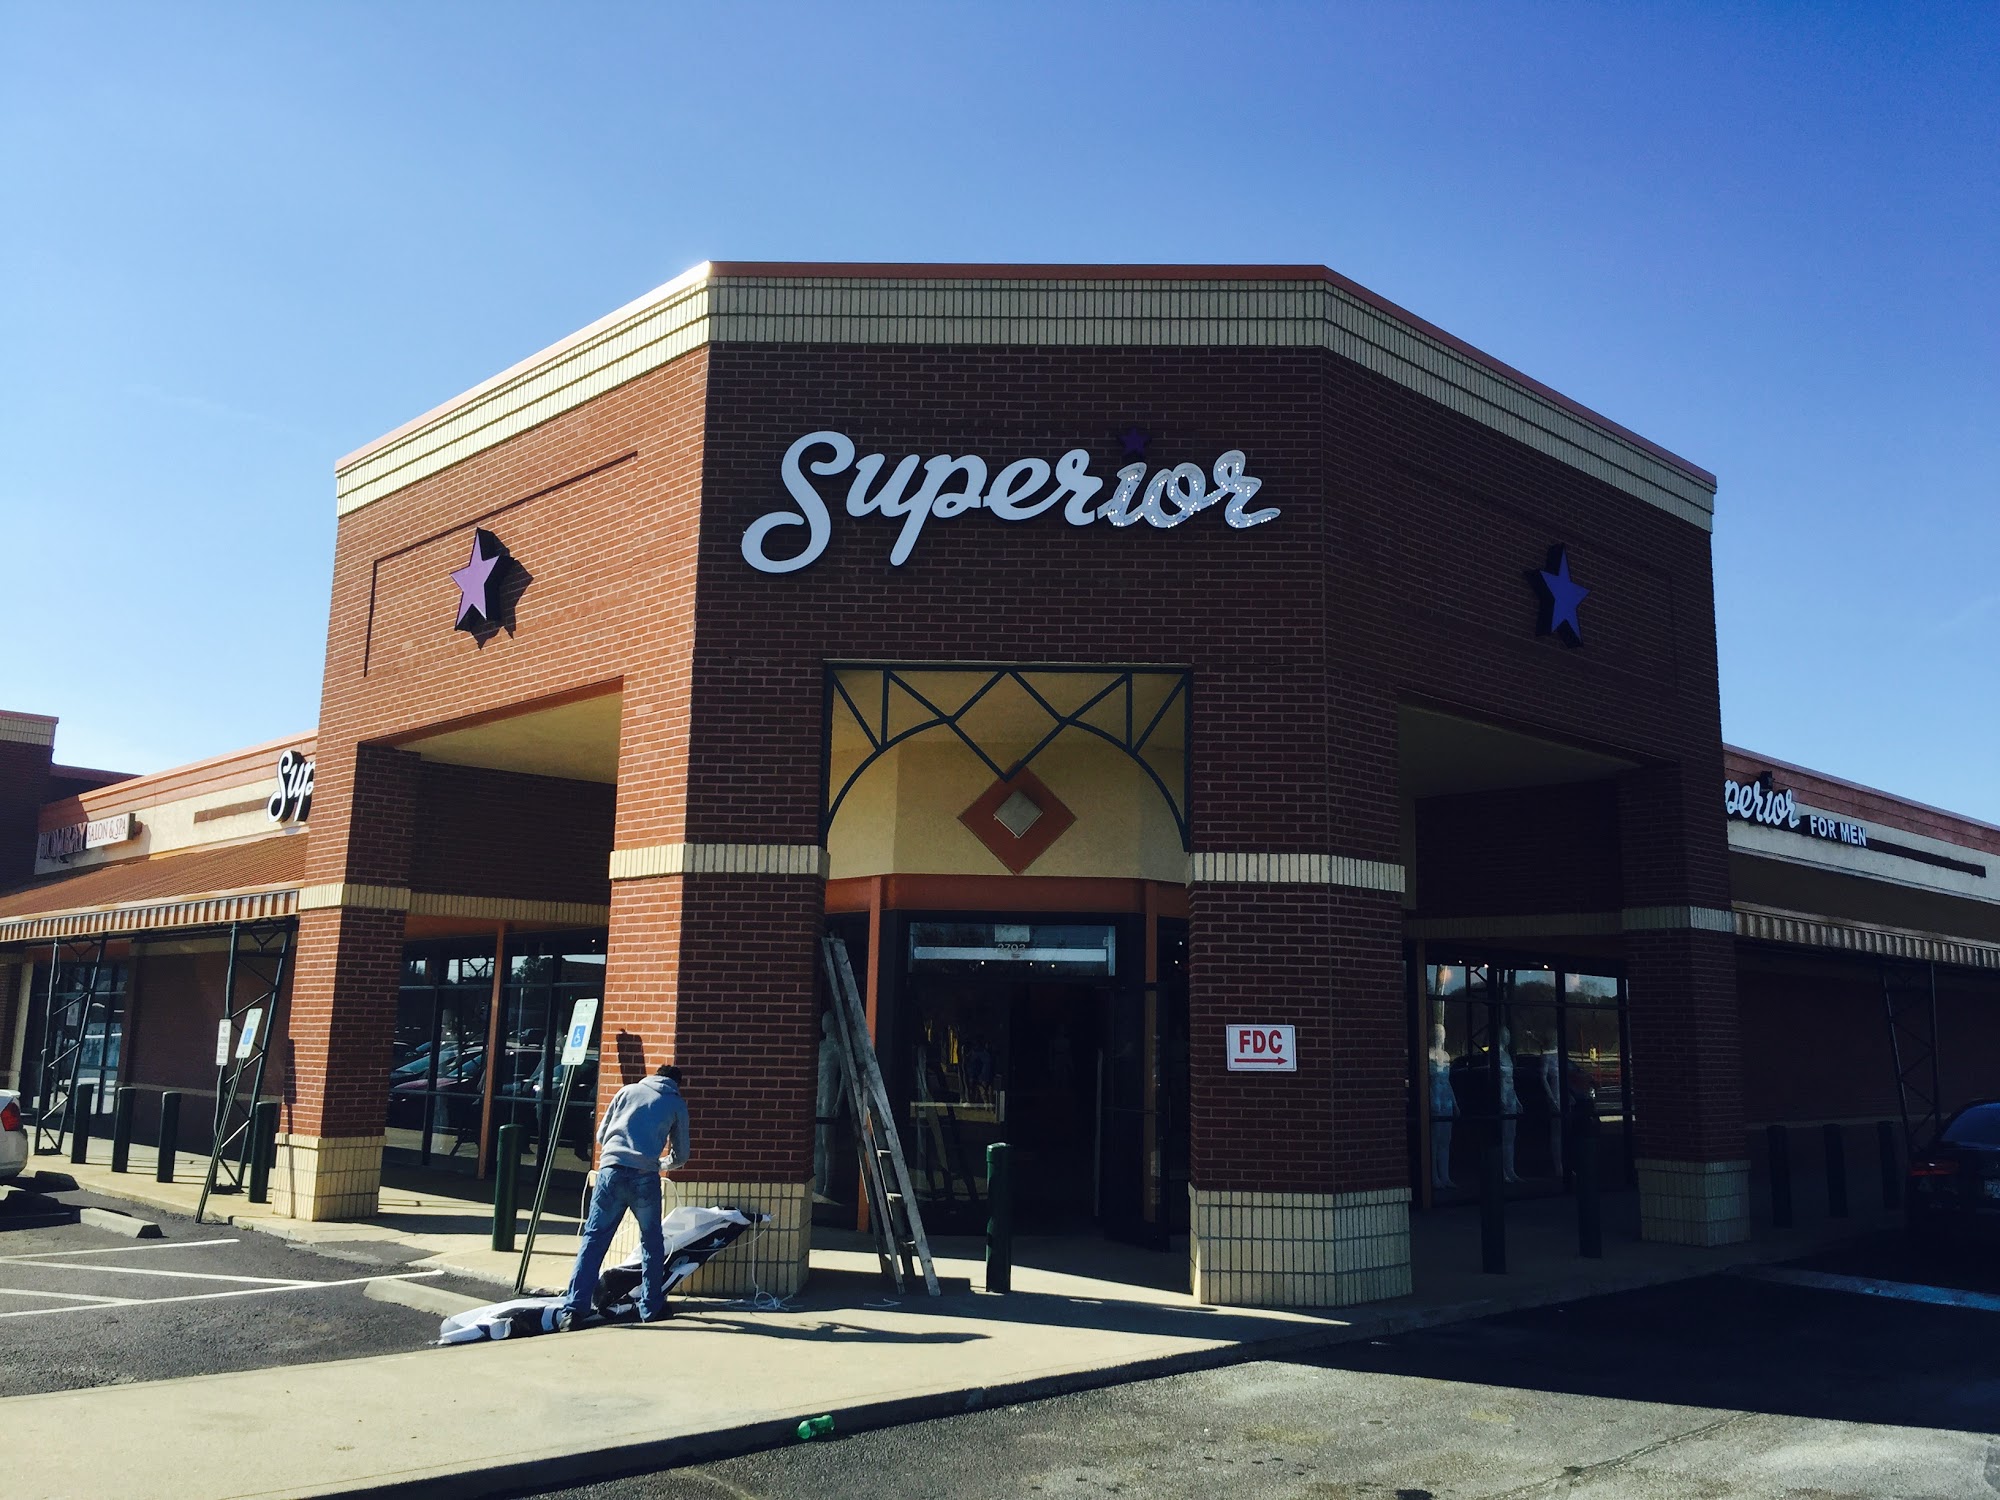 The Superior Shop